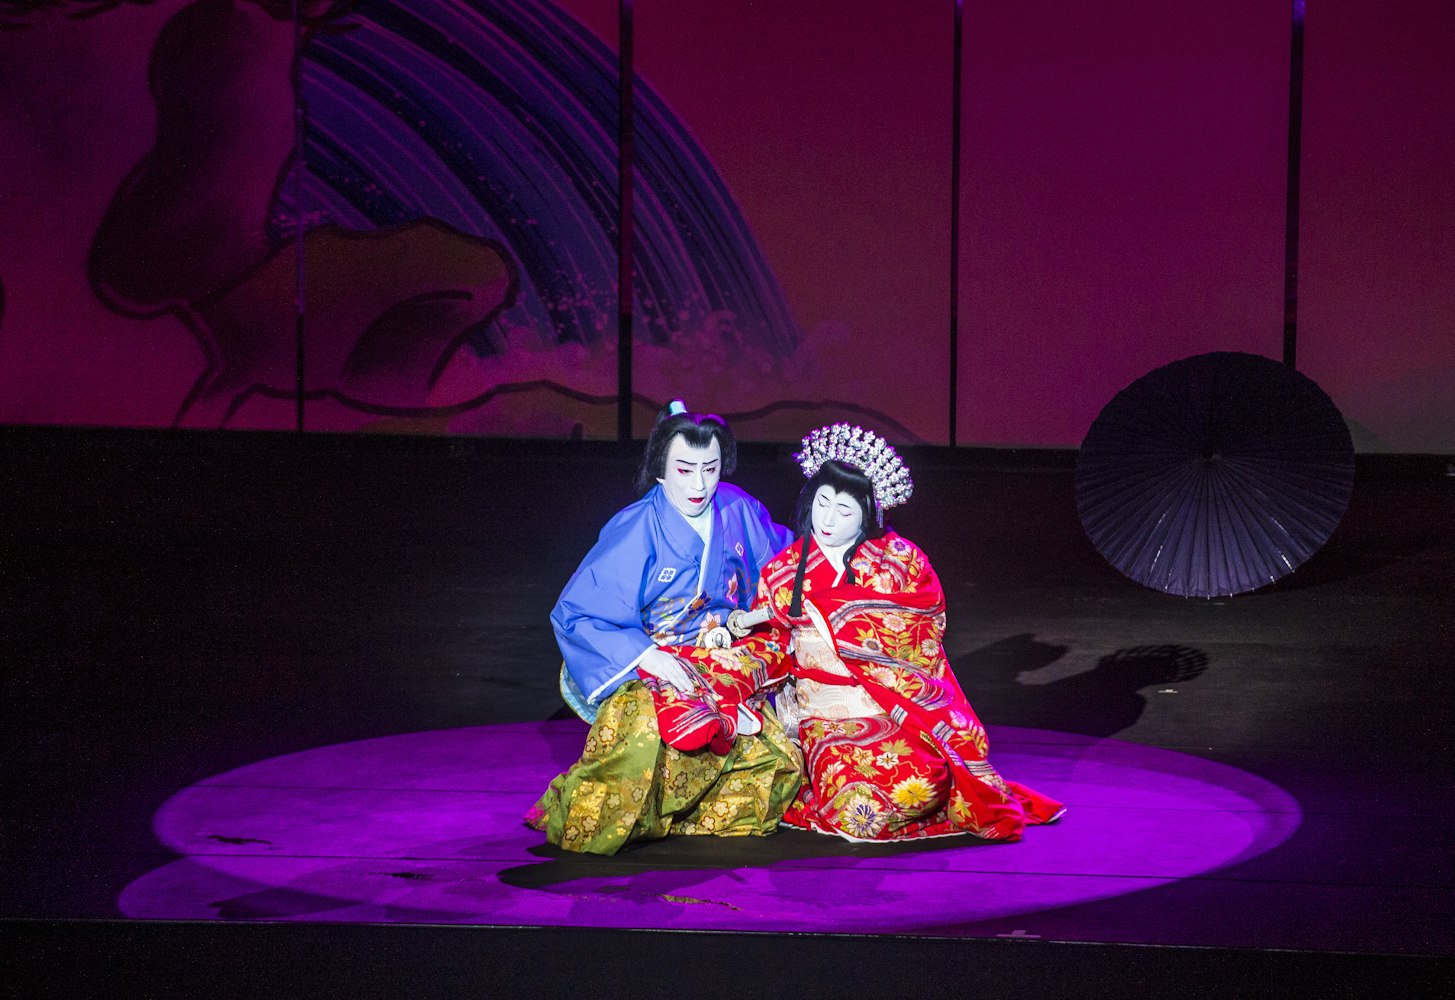 Kabuki is a classical Japanese dance-drama